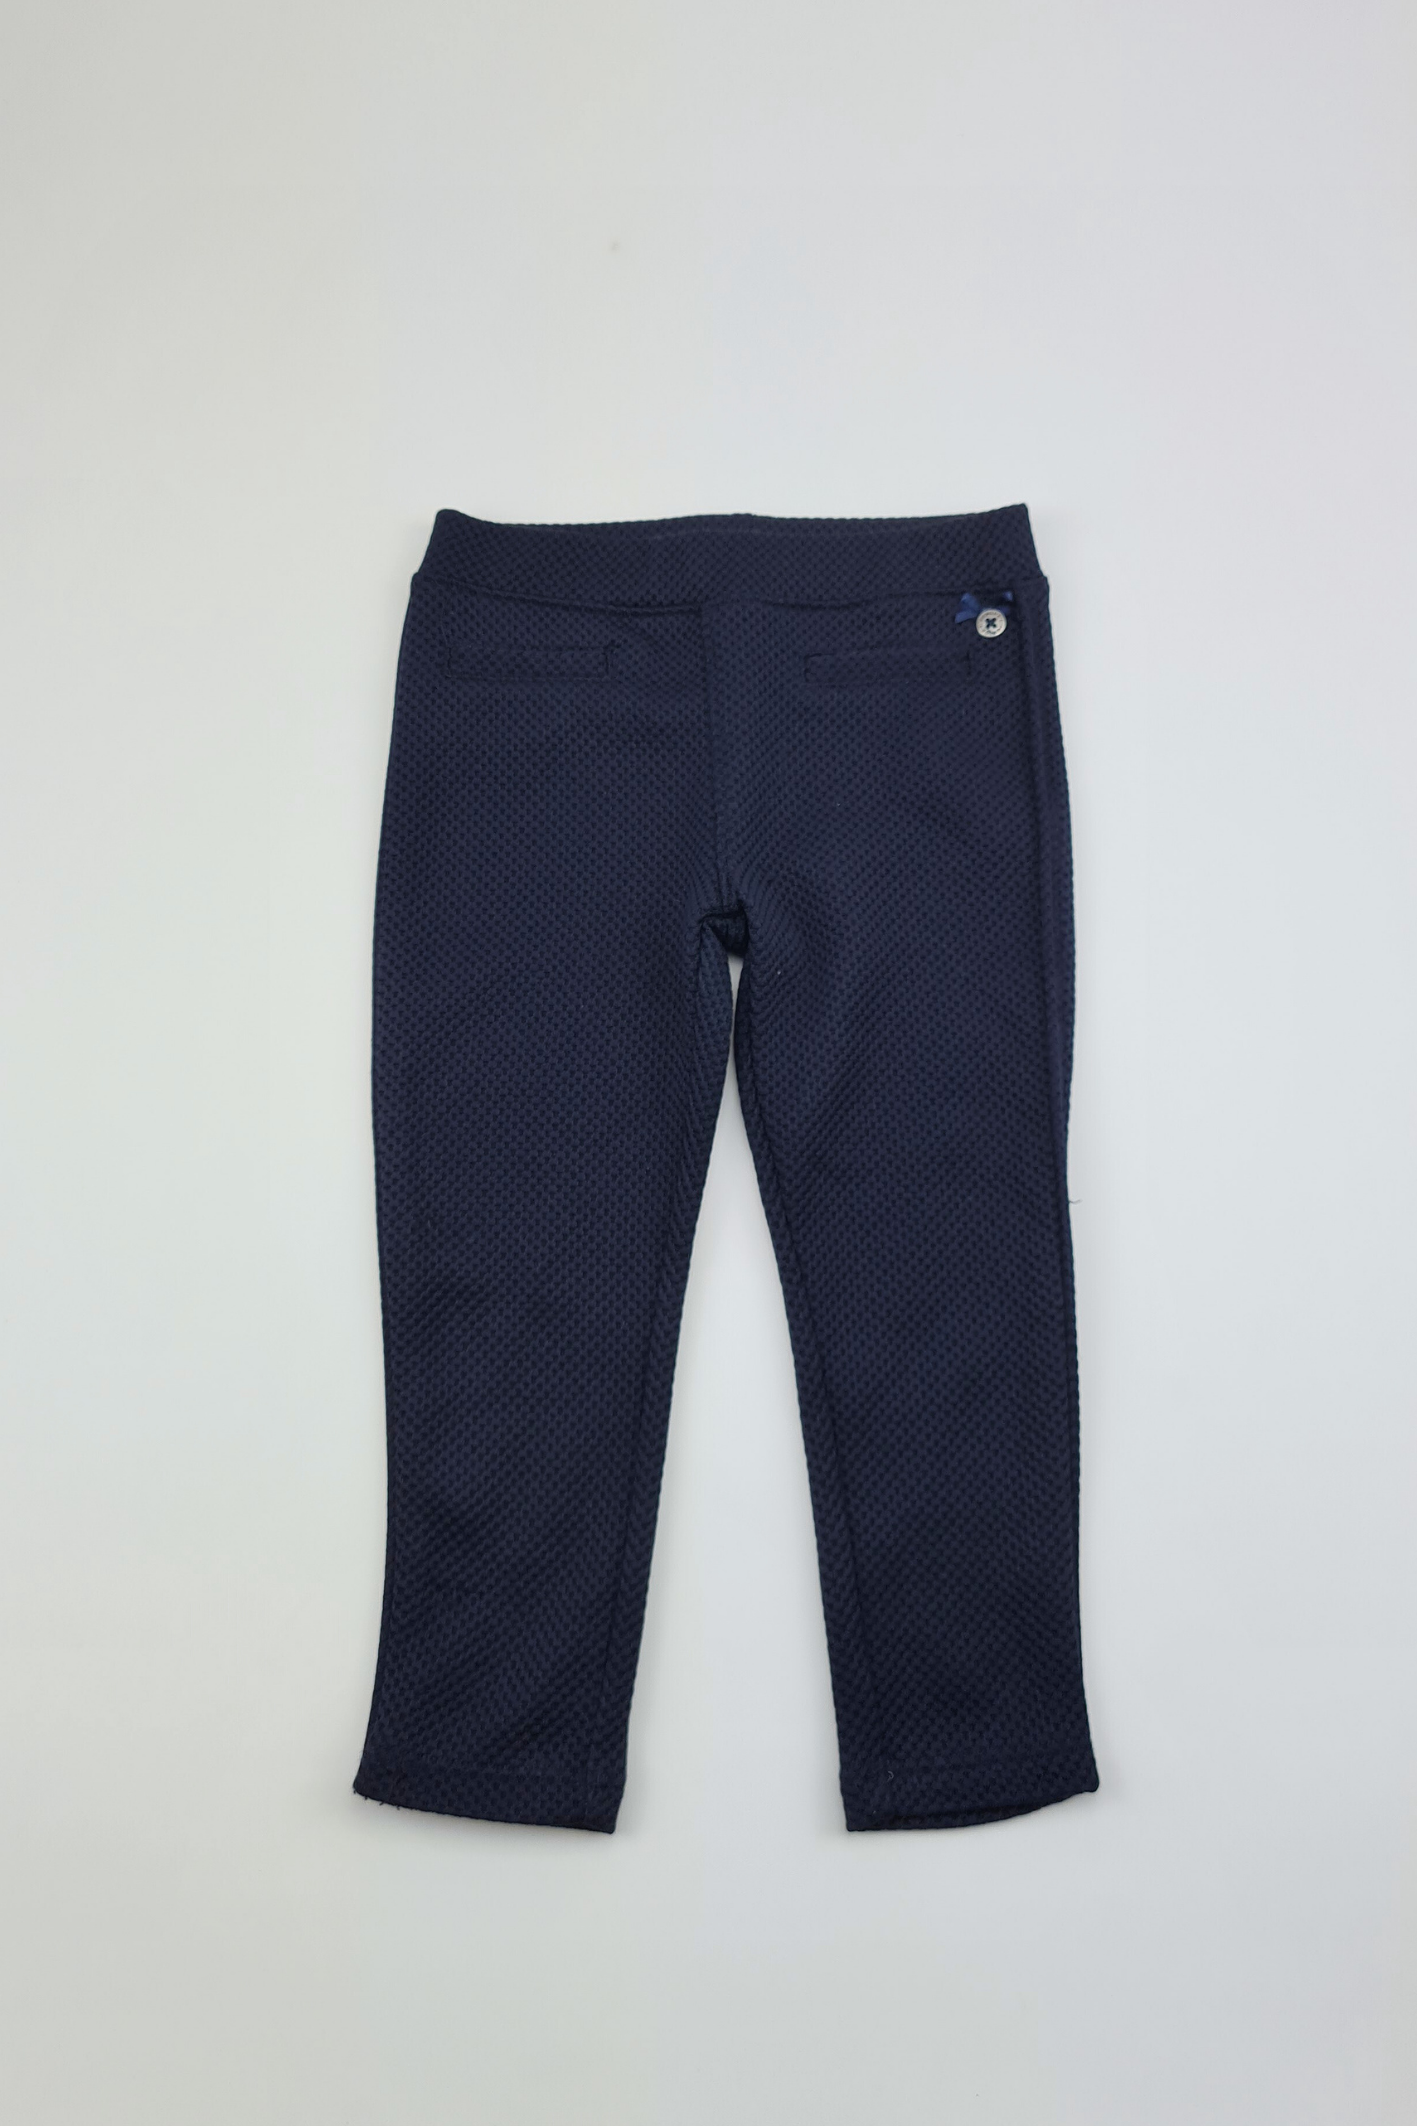 18-24m - Navy  Blue Trousers (Jasper Conran)